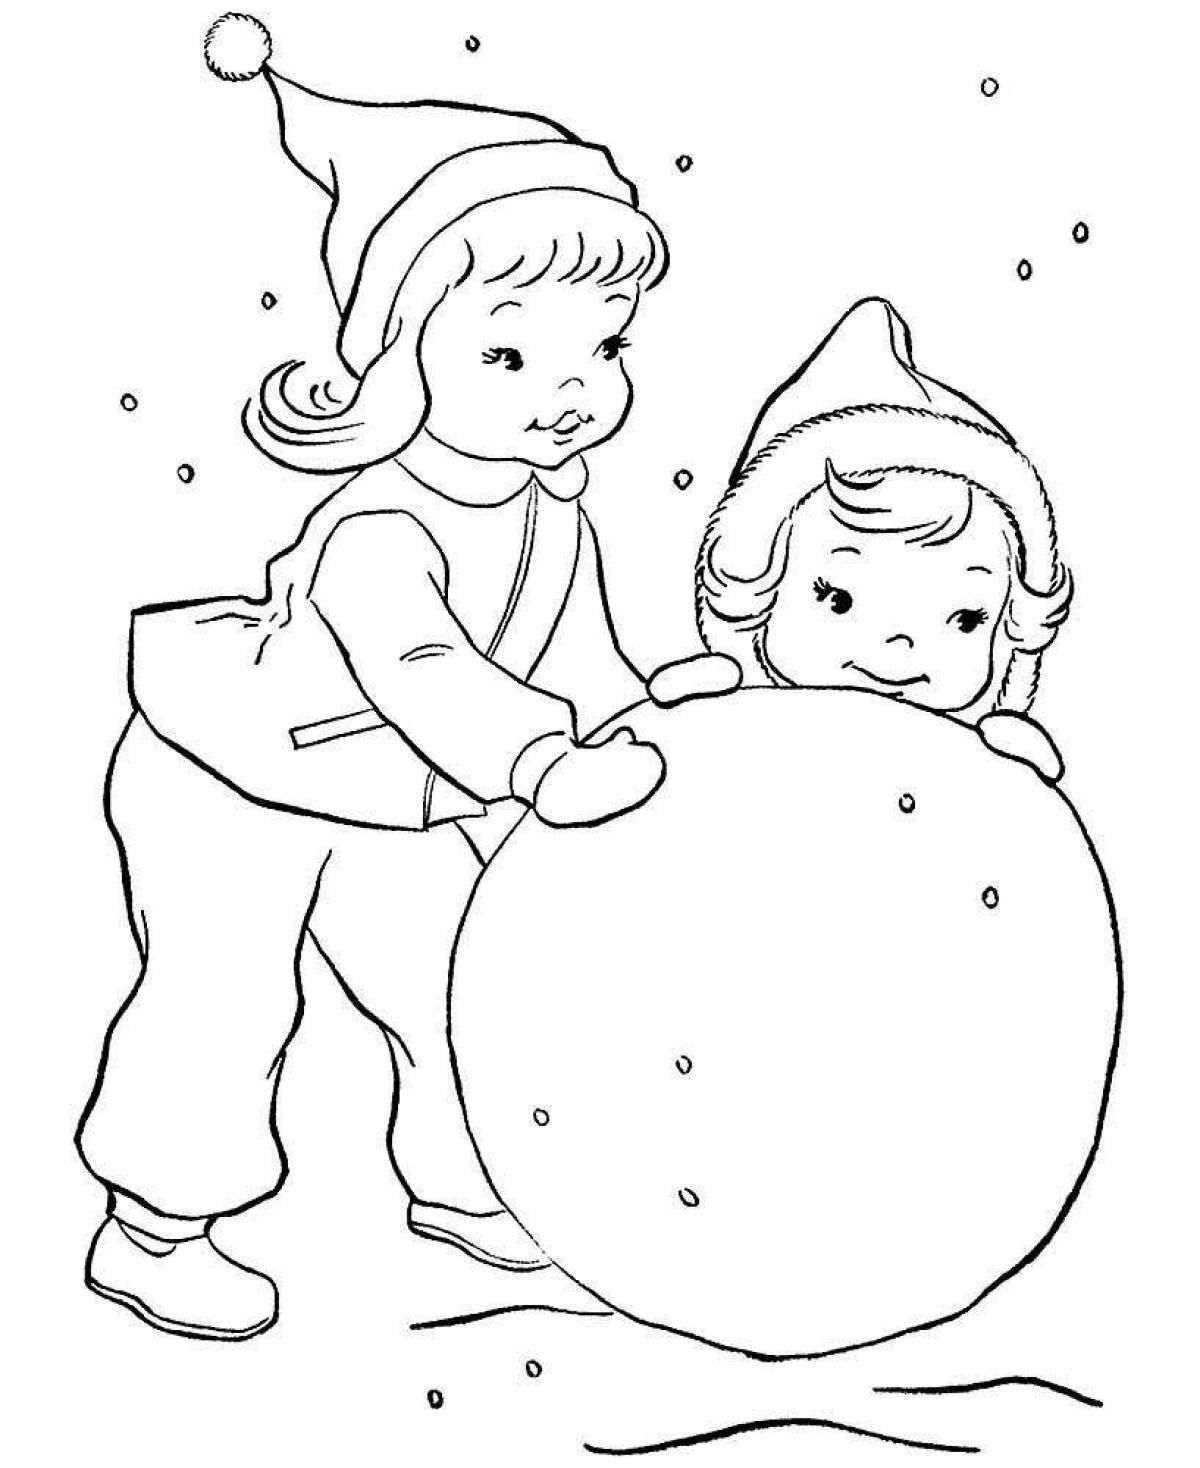 Children making a snowman #5